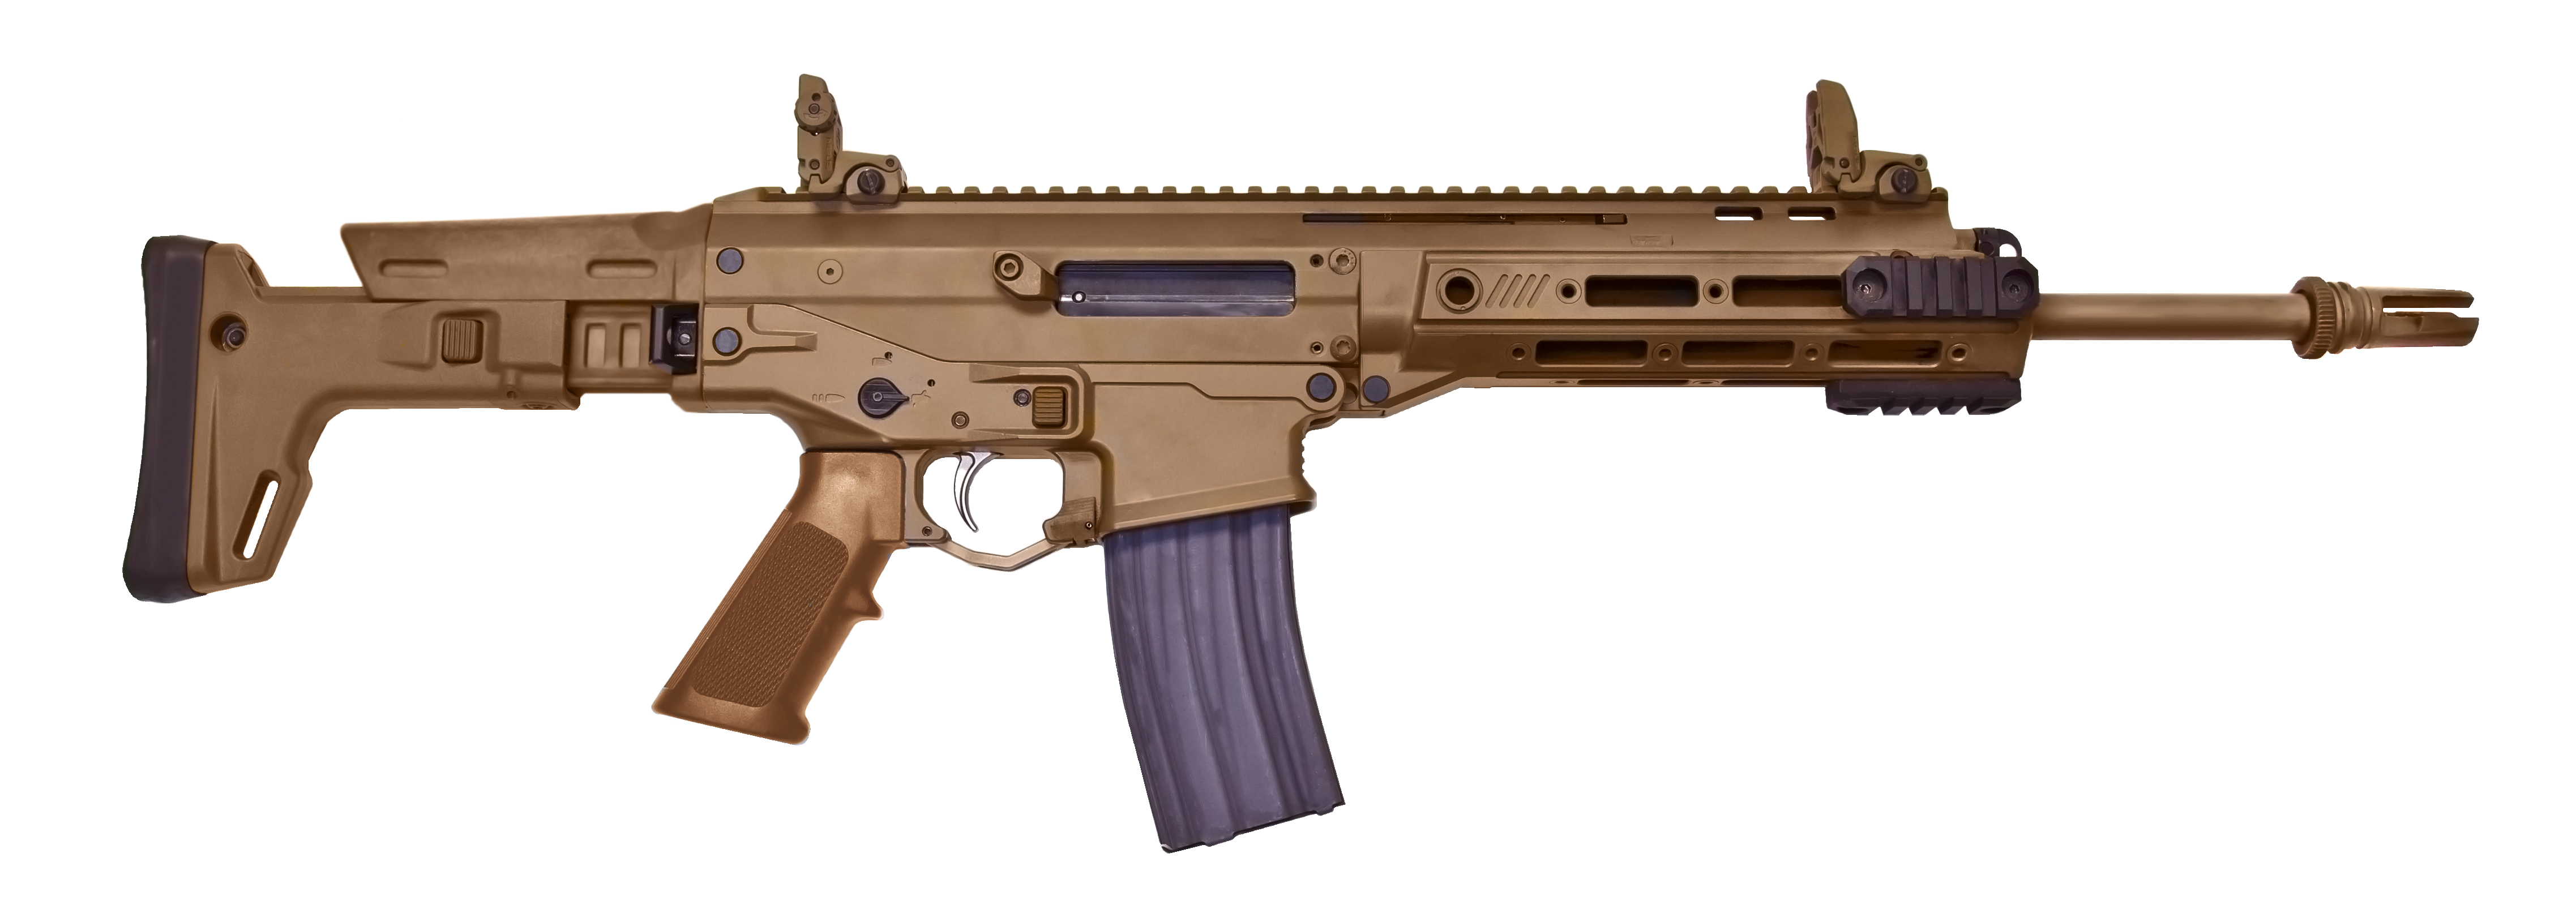 Remington Acr Weapon Gun Military Rifle Police Y Wallpaper Background